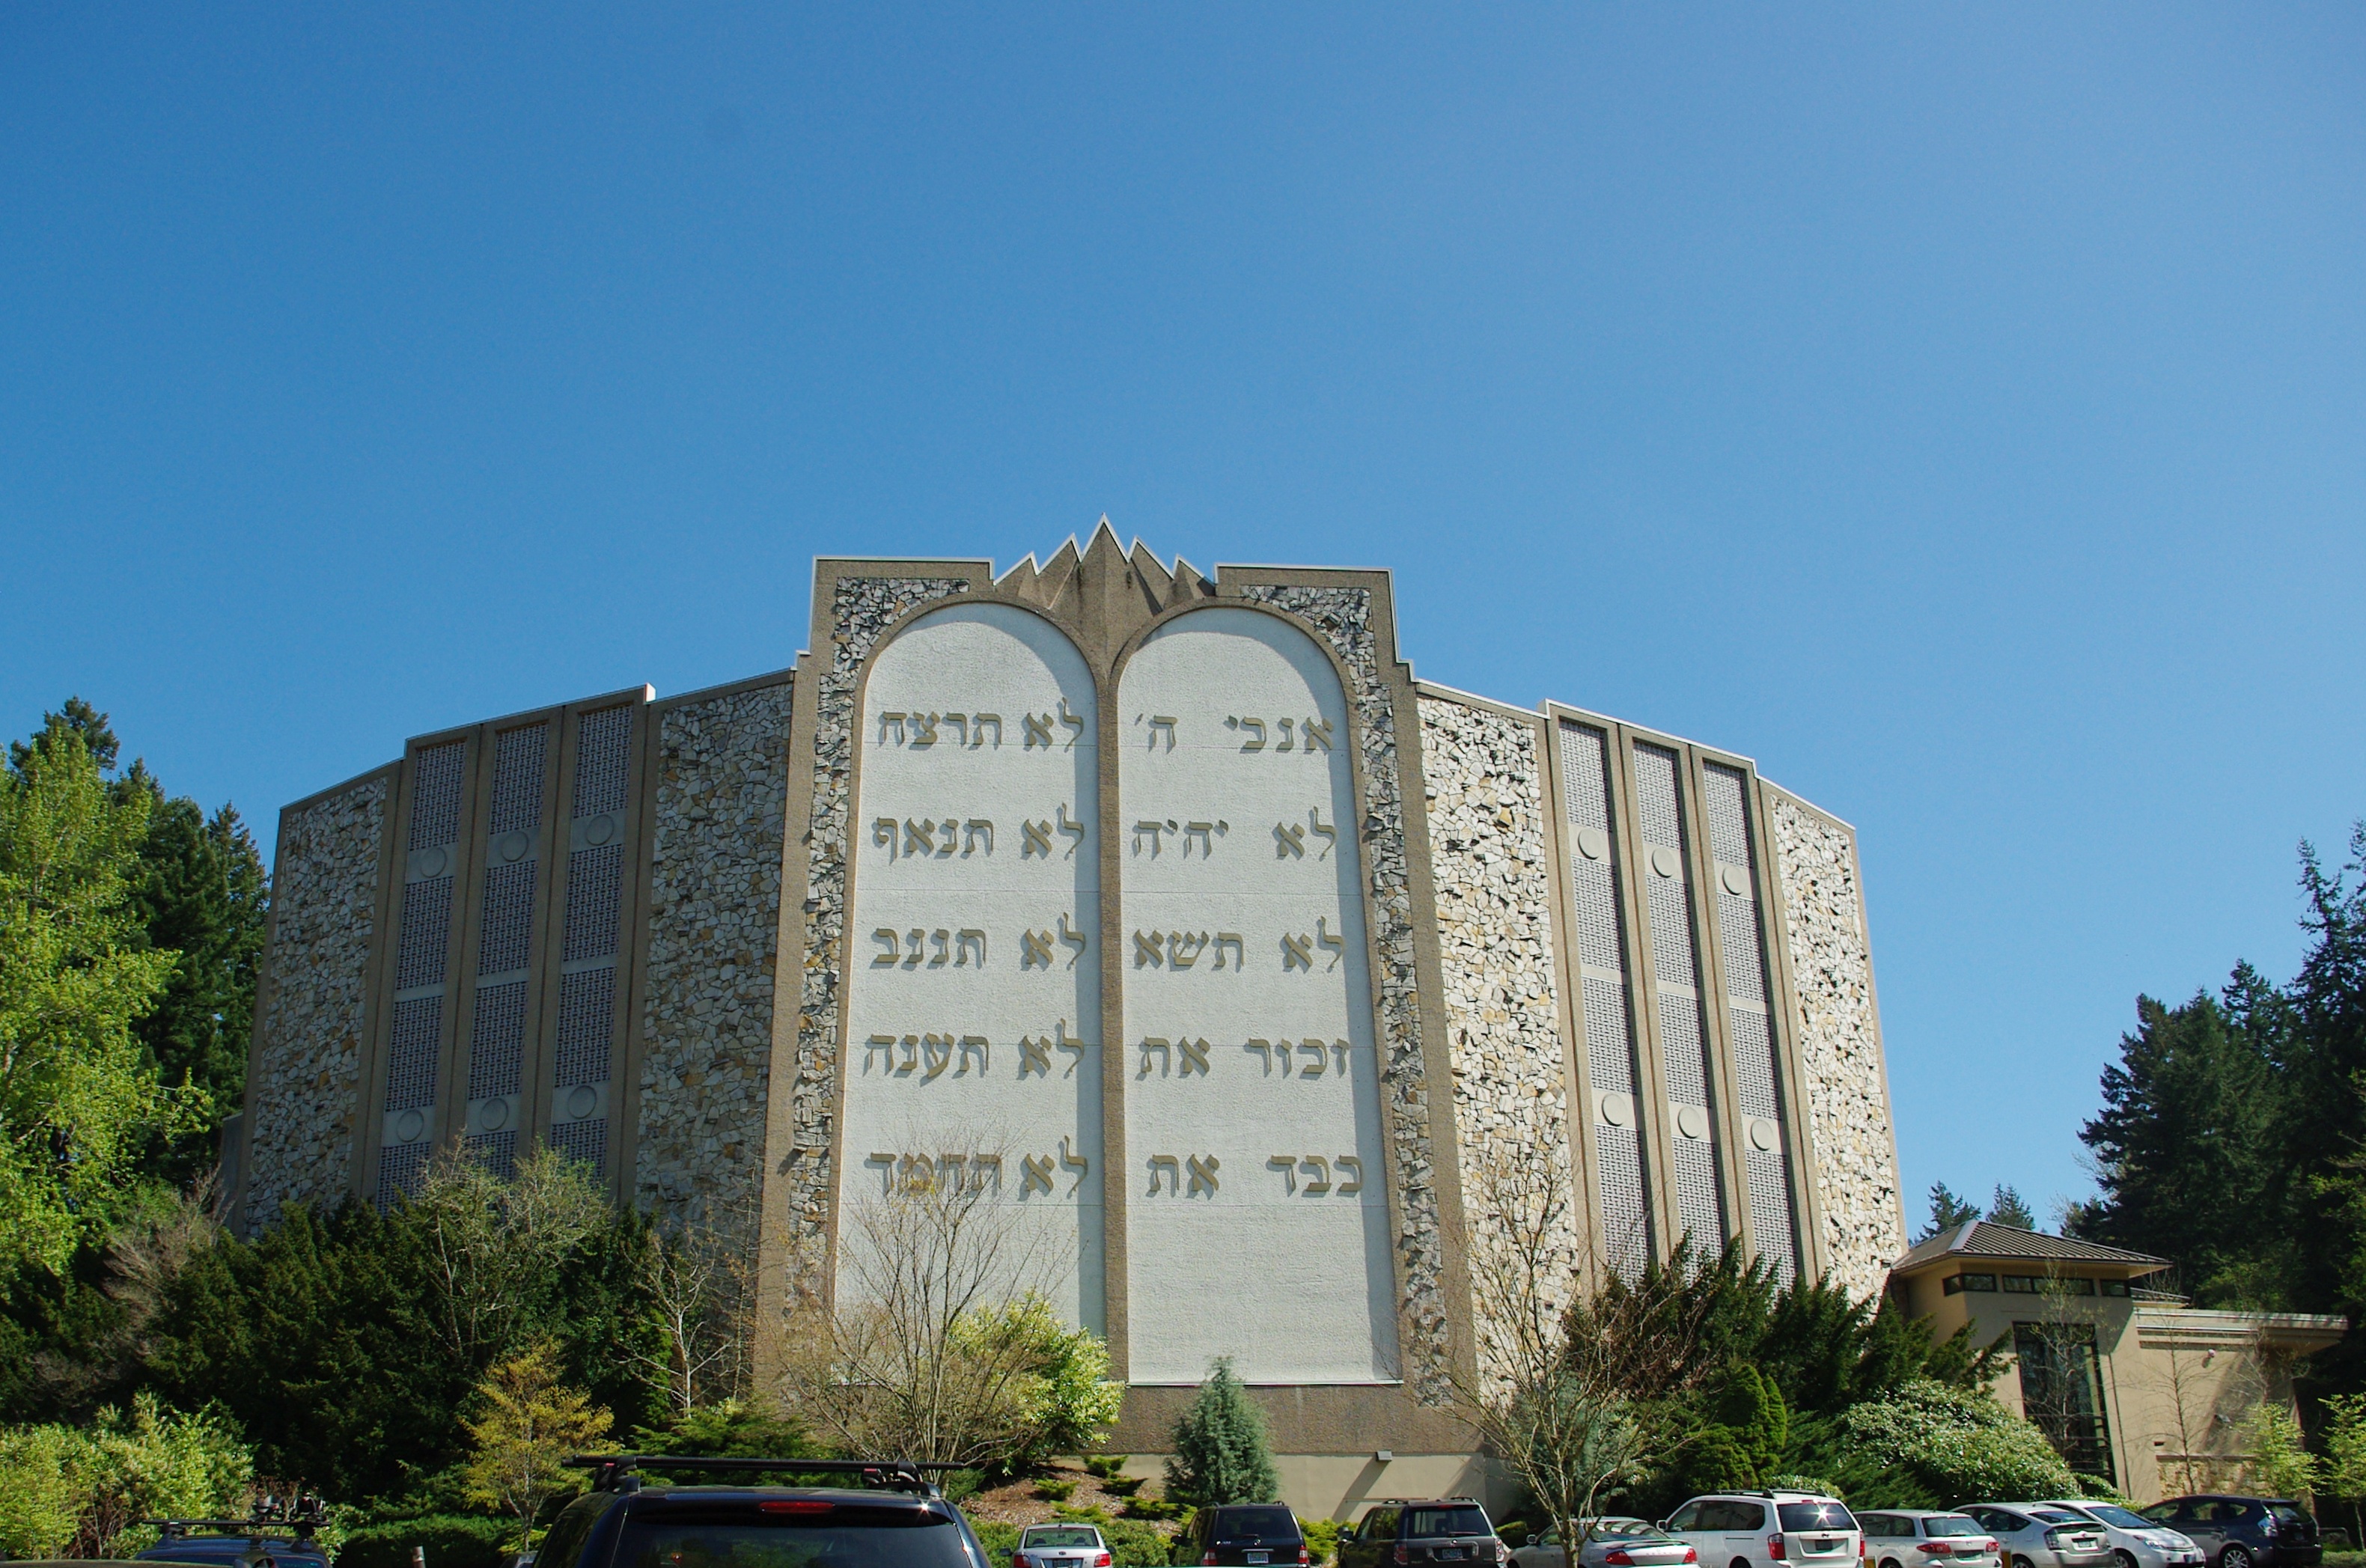 Shalom - Wikipedia